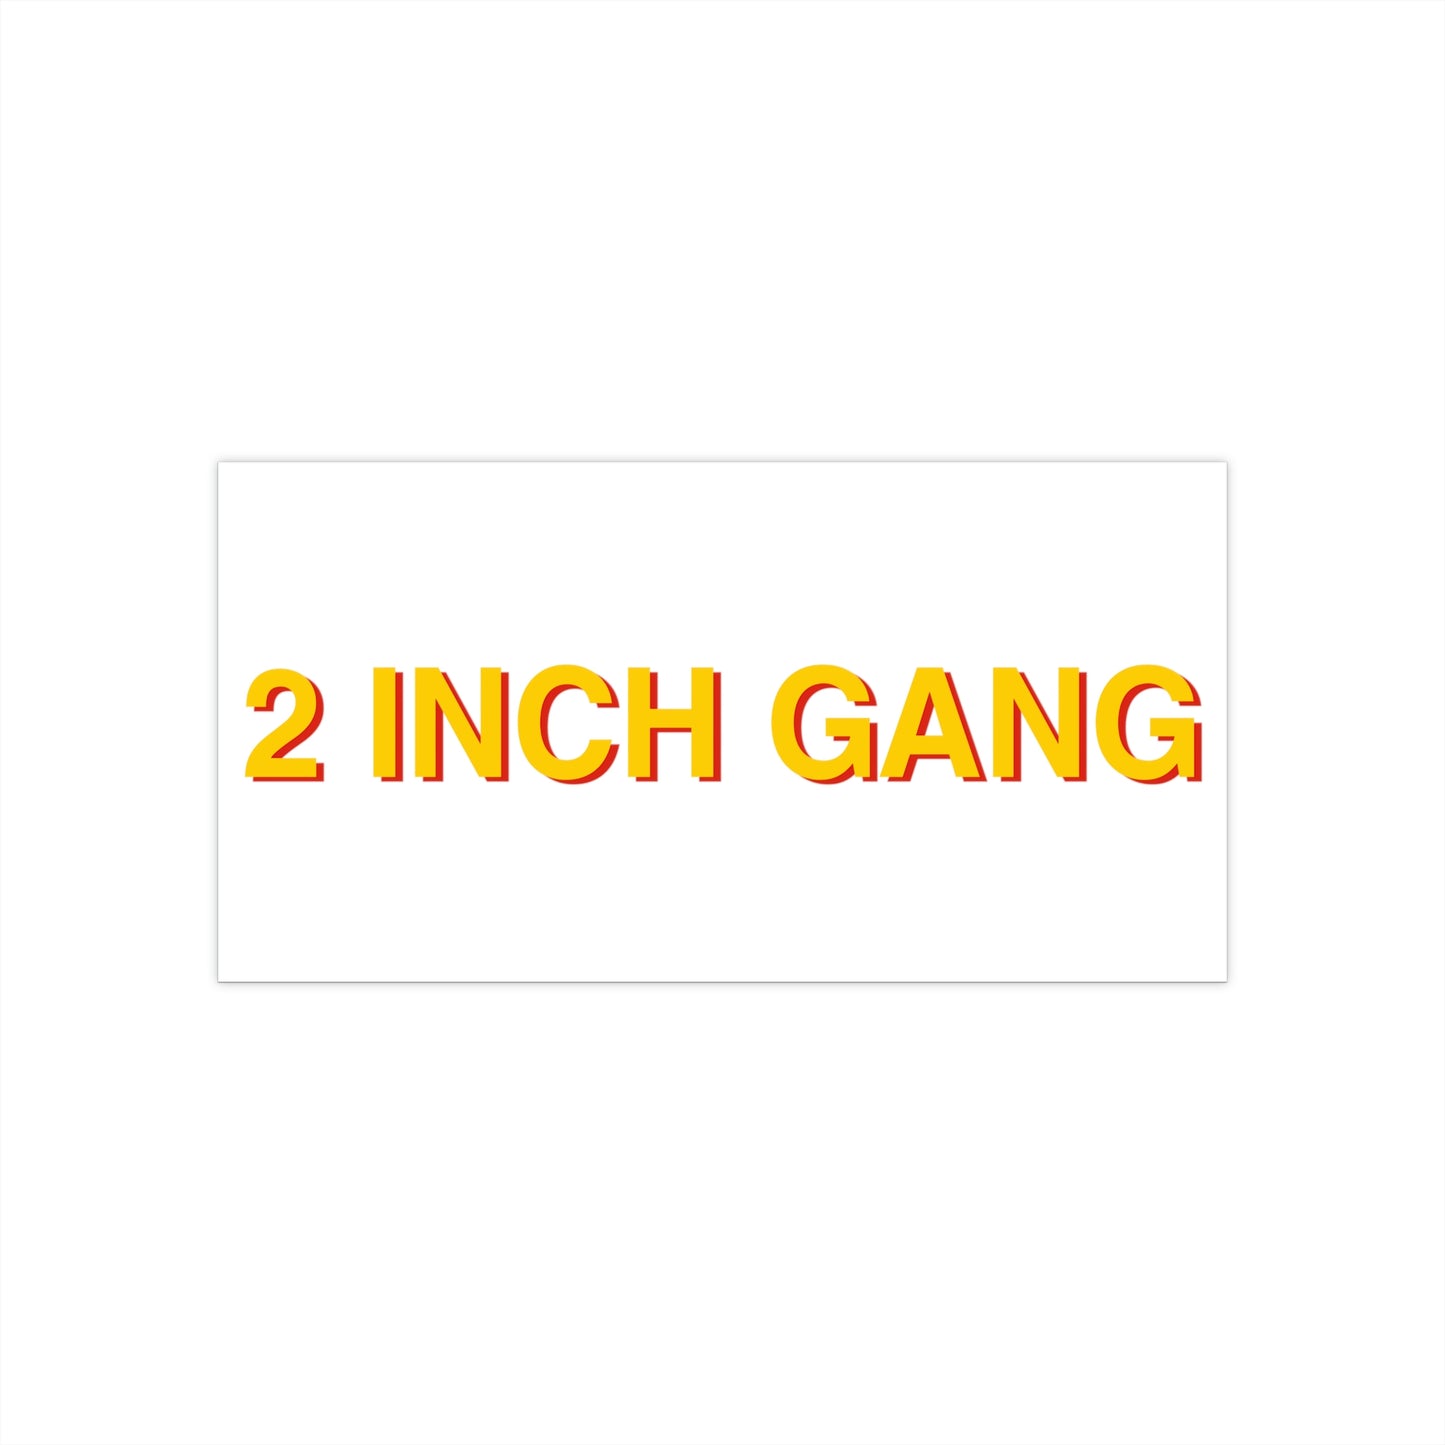 2 INCH GANG Bumper Sticker Yellow